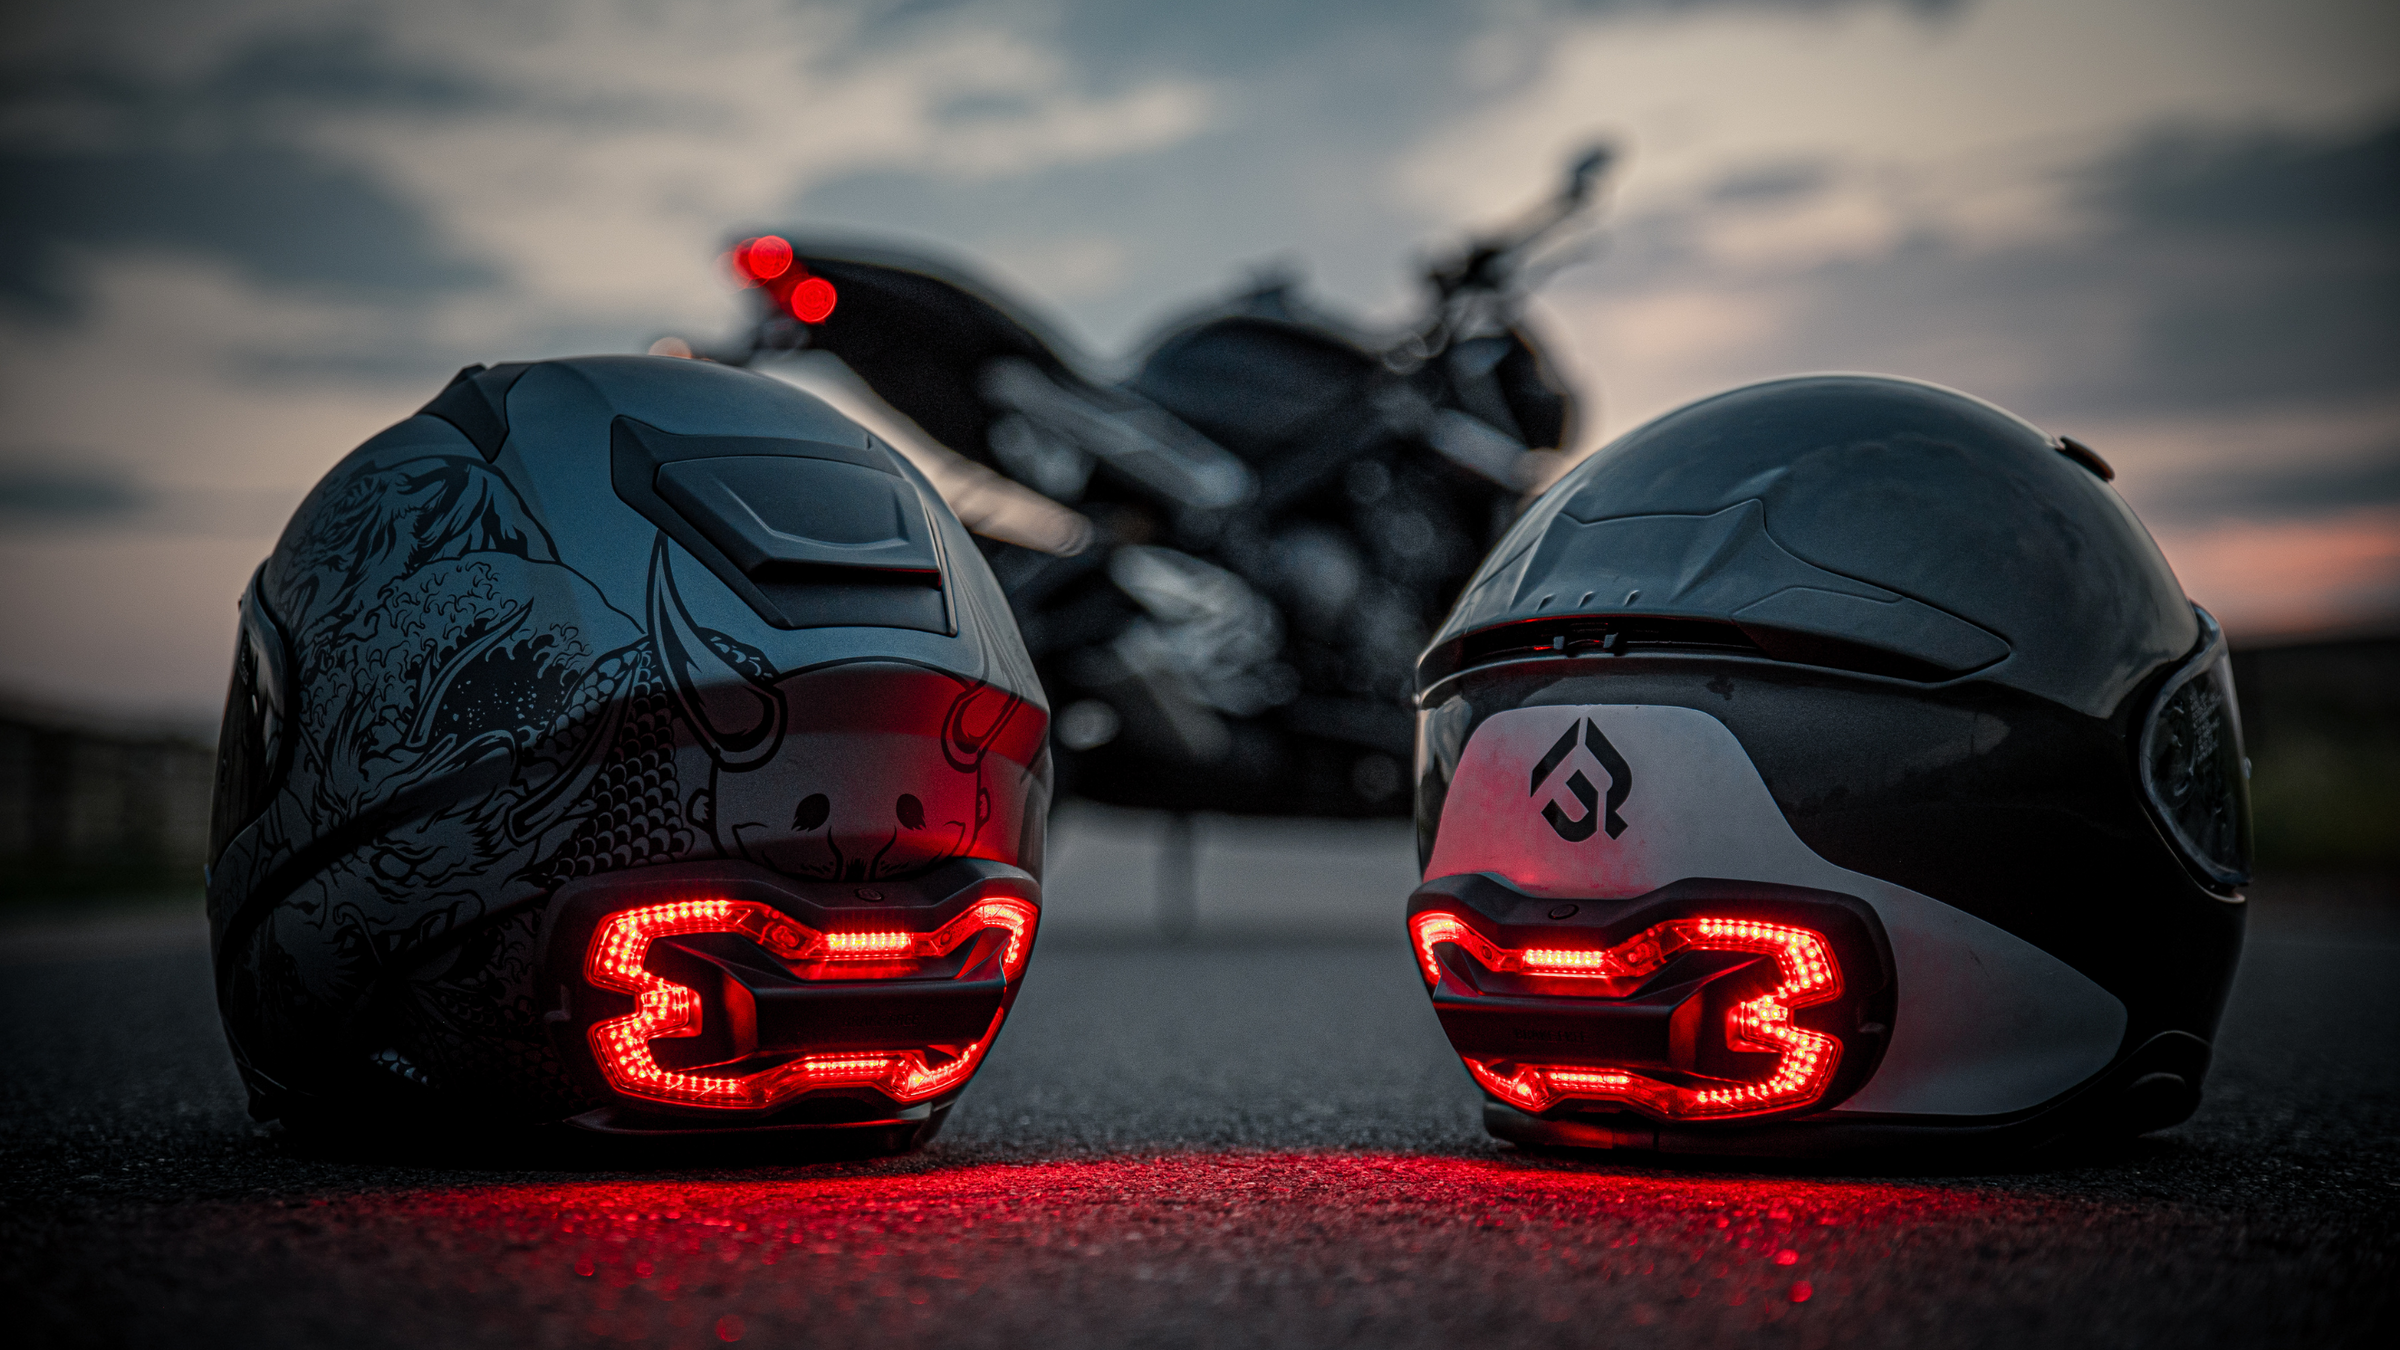 Brake Free smart brake light accessory for motorcycle helmets shown on 2 different helmets